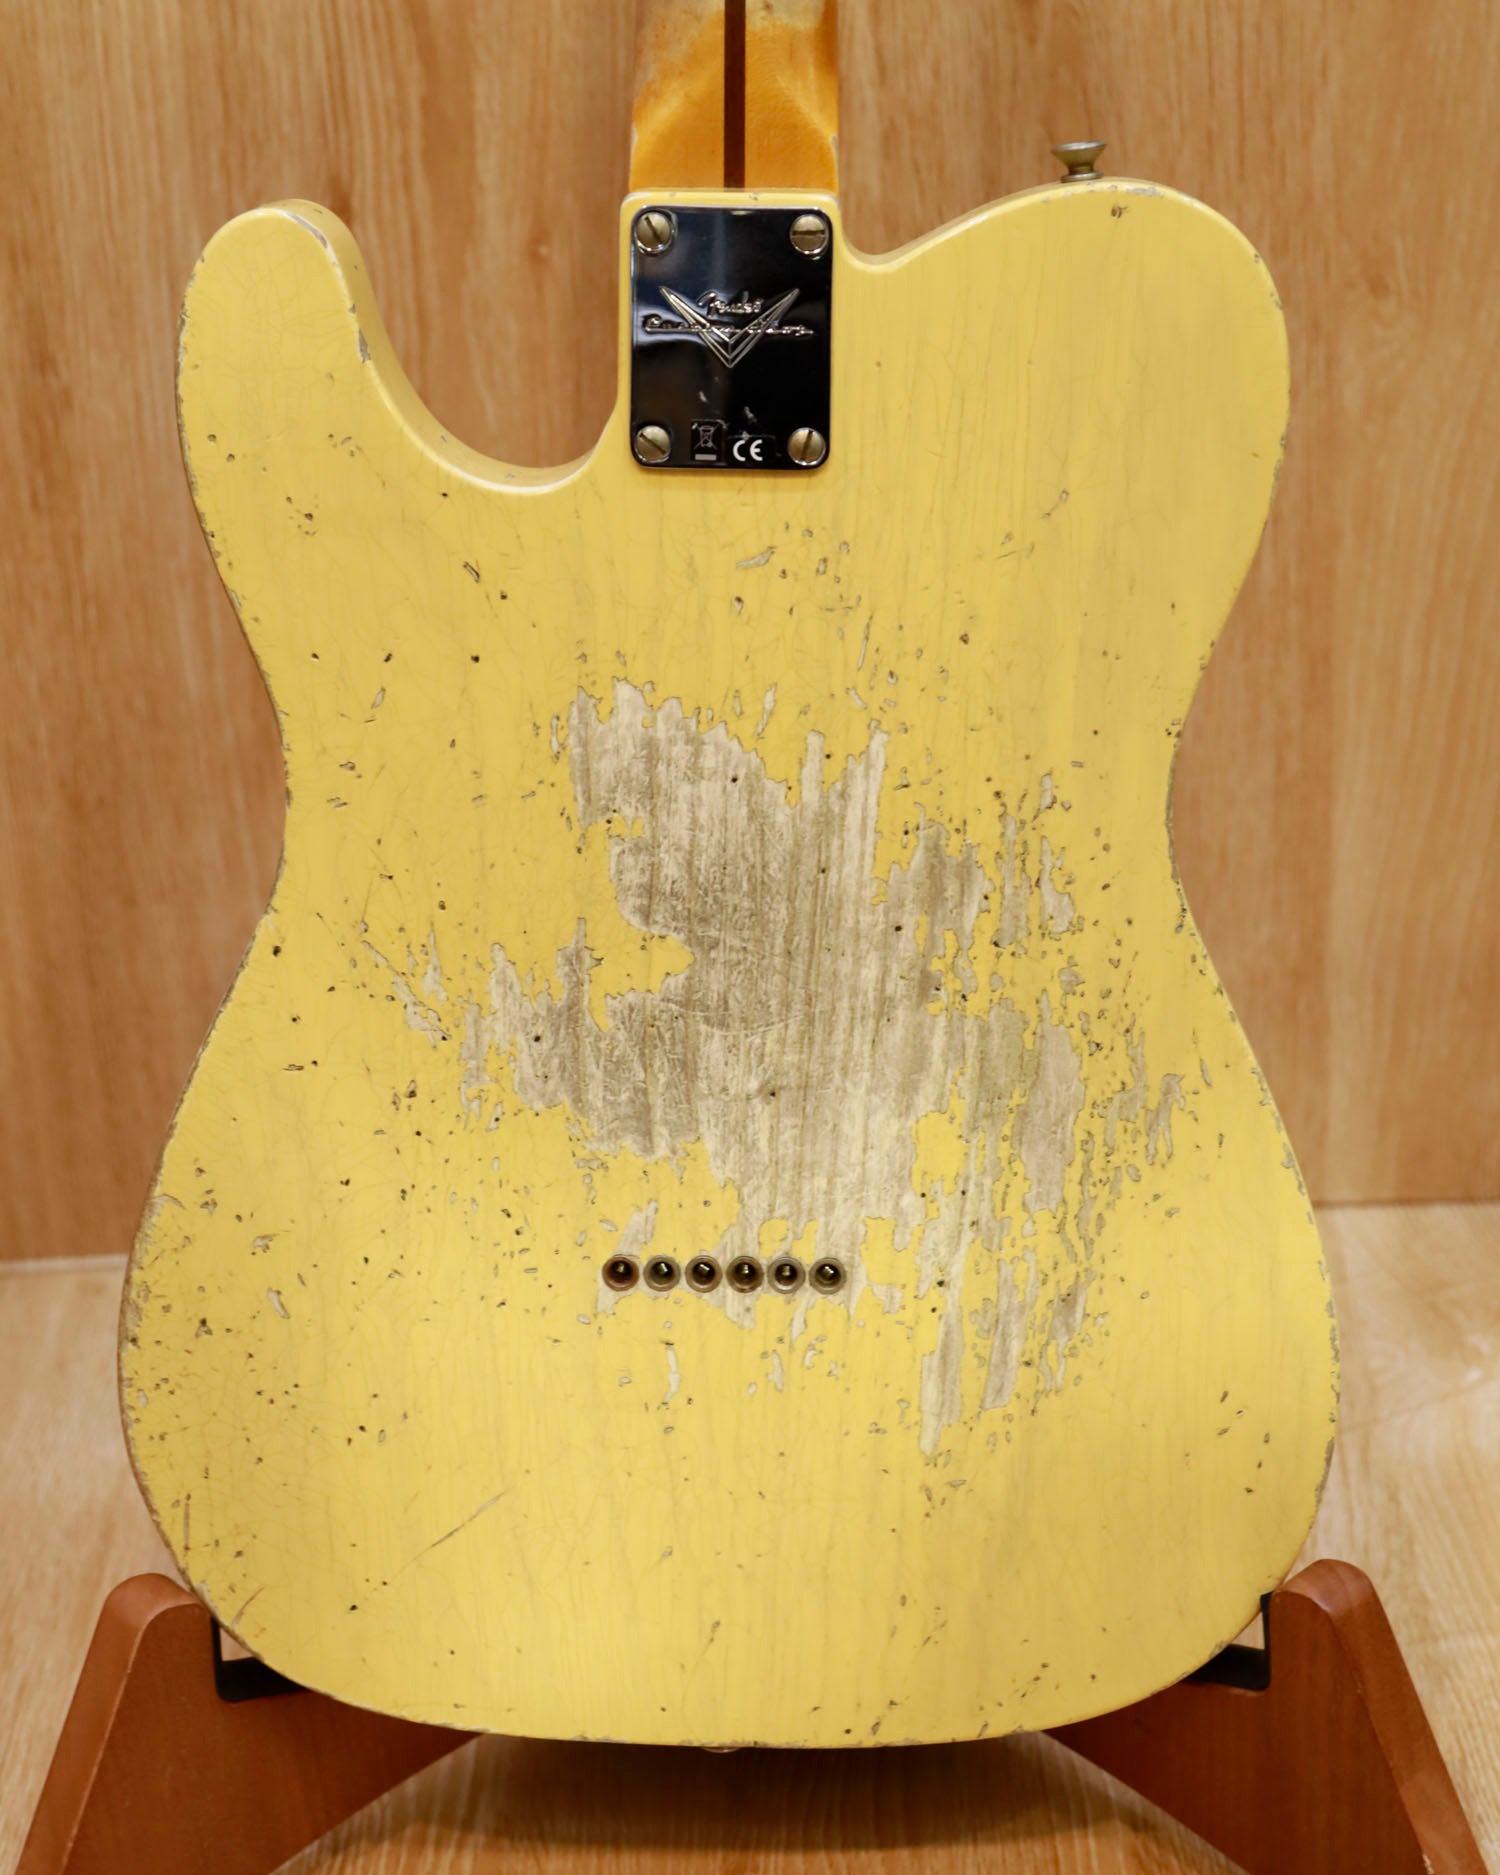 Fender Custom '52 Telecaster Super Heavy Relic - ANBL ( Finish: Aged Nocaster Blonde)